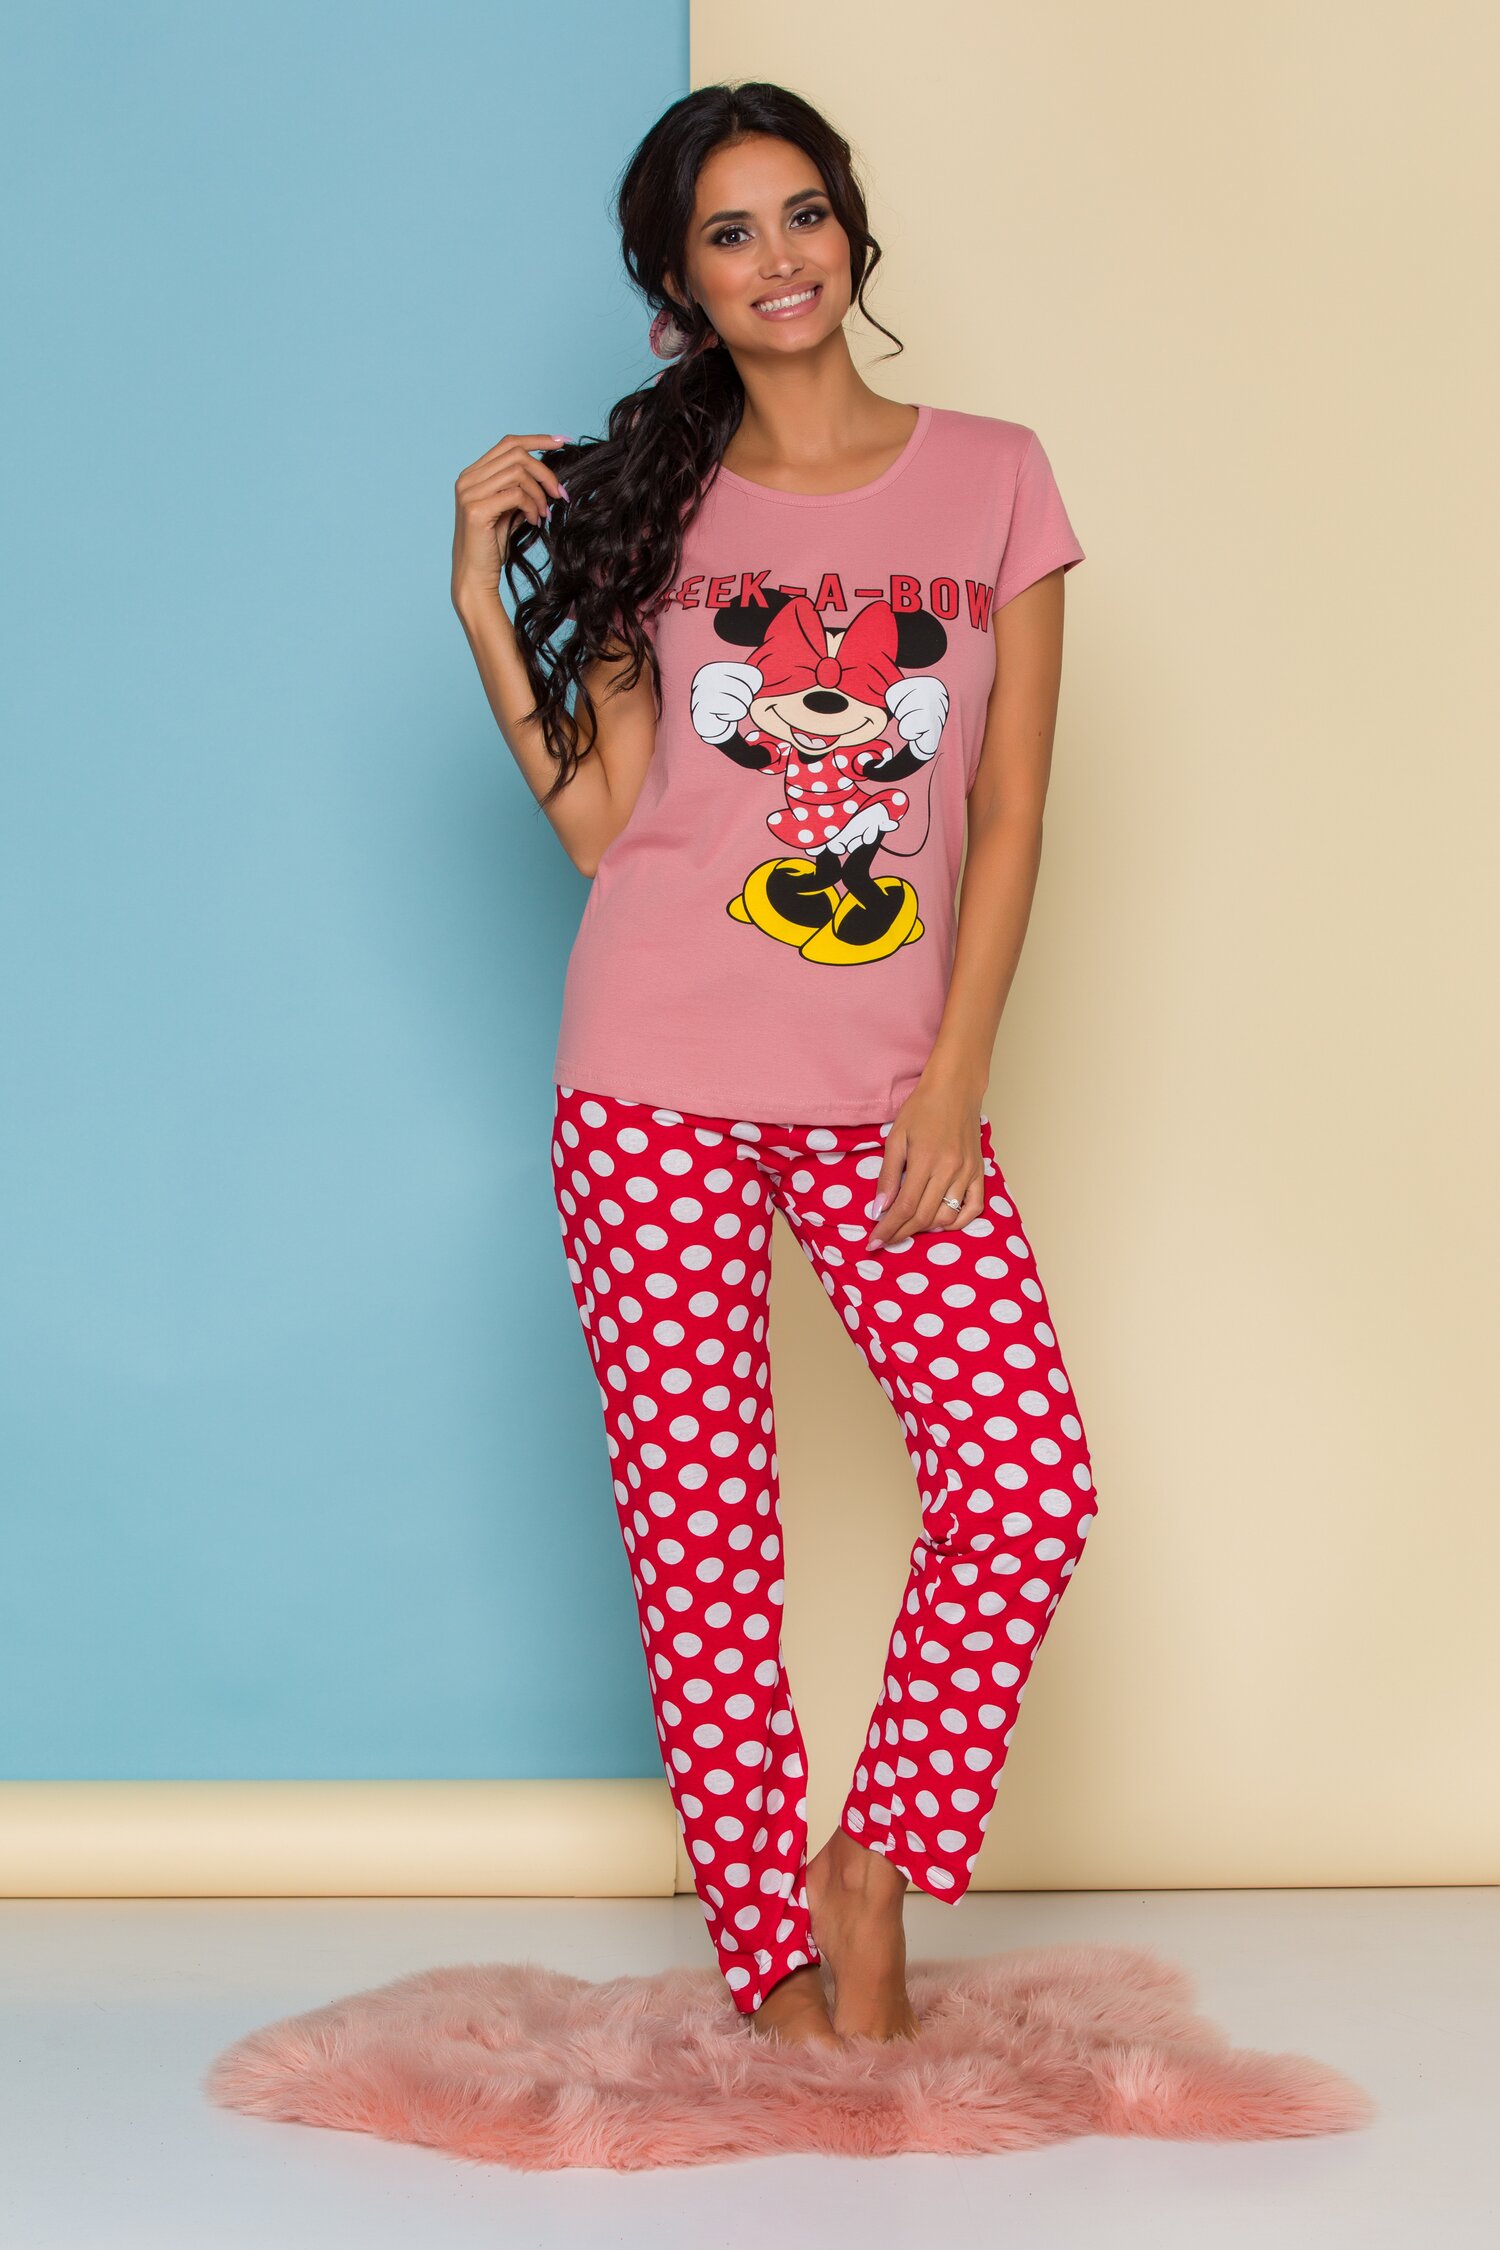 Pijama Peak-a-bow cu tricou roz Minnie Mouse si buline